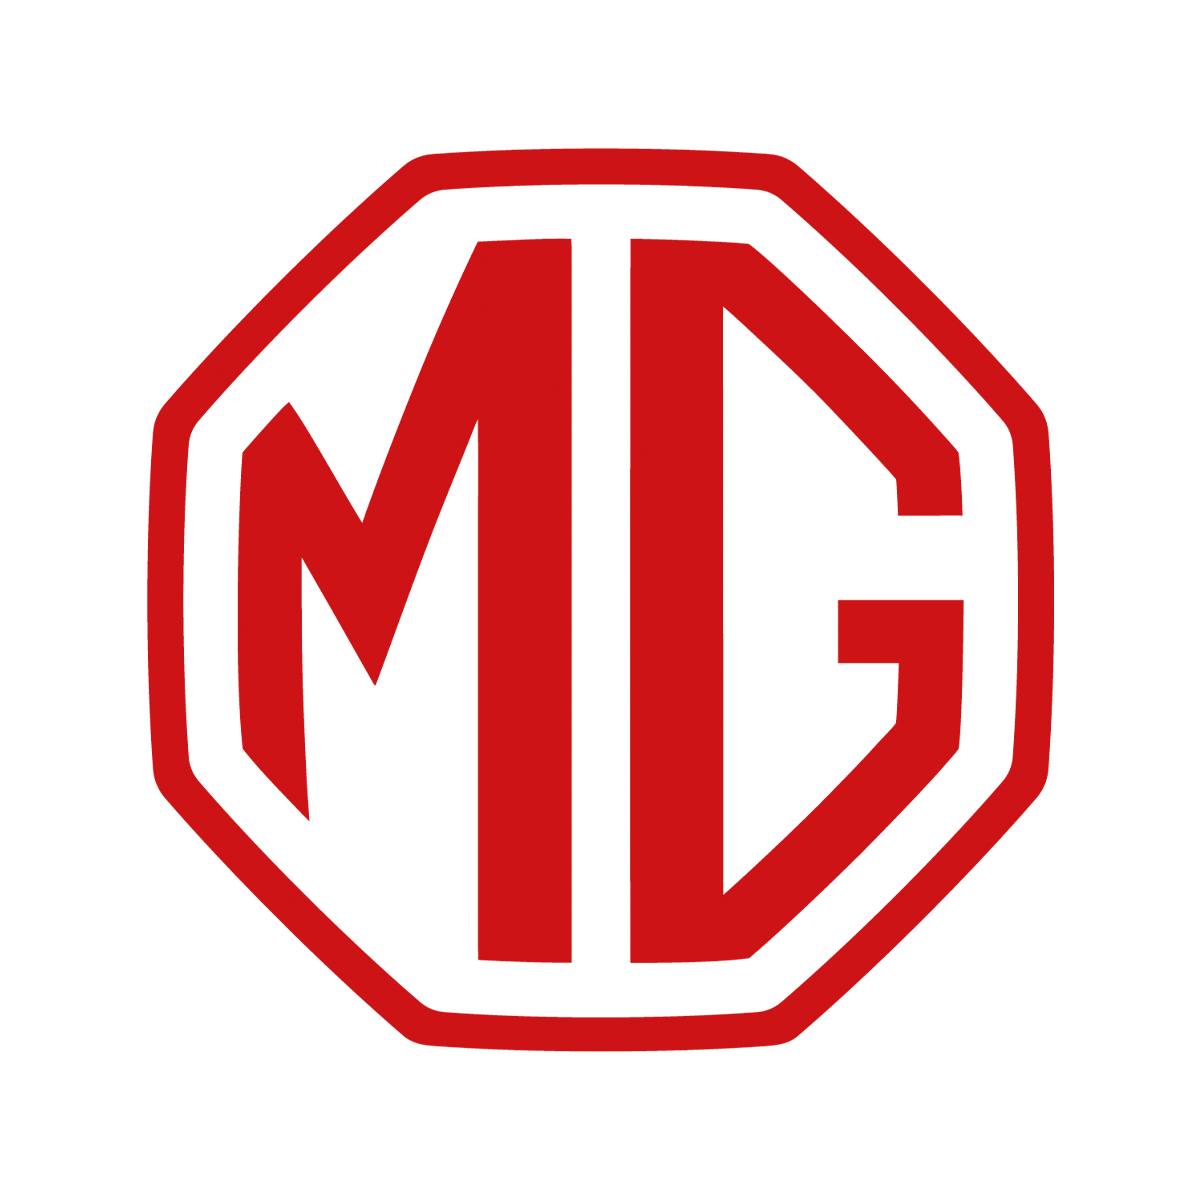 MG Luxury Logo Design PNG Images